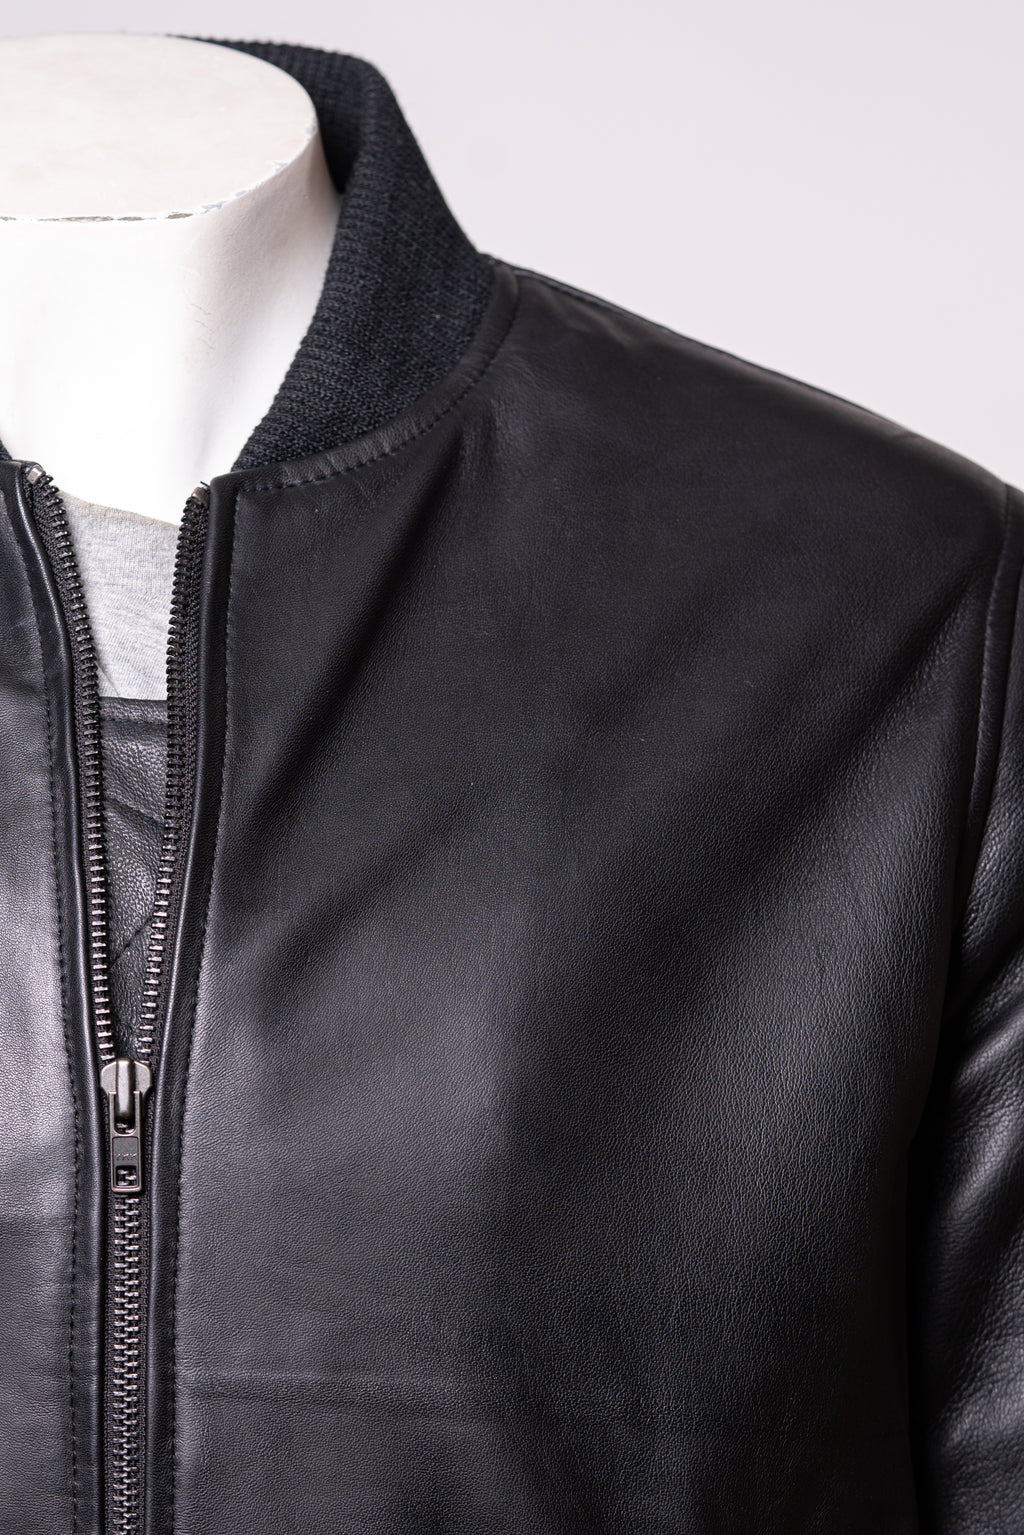 Men's Black Rib-Knit Collar Leather Bomber Jacket: Benedict